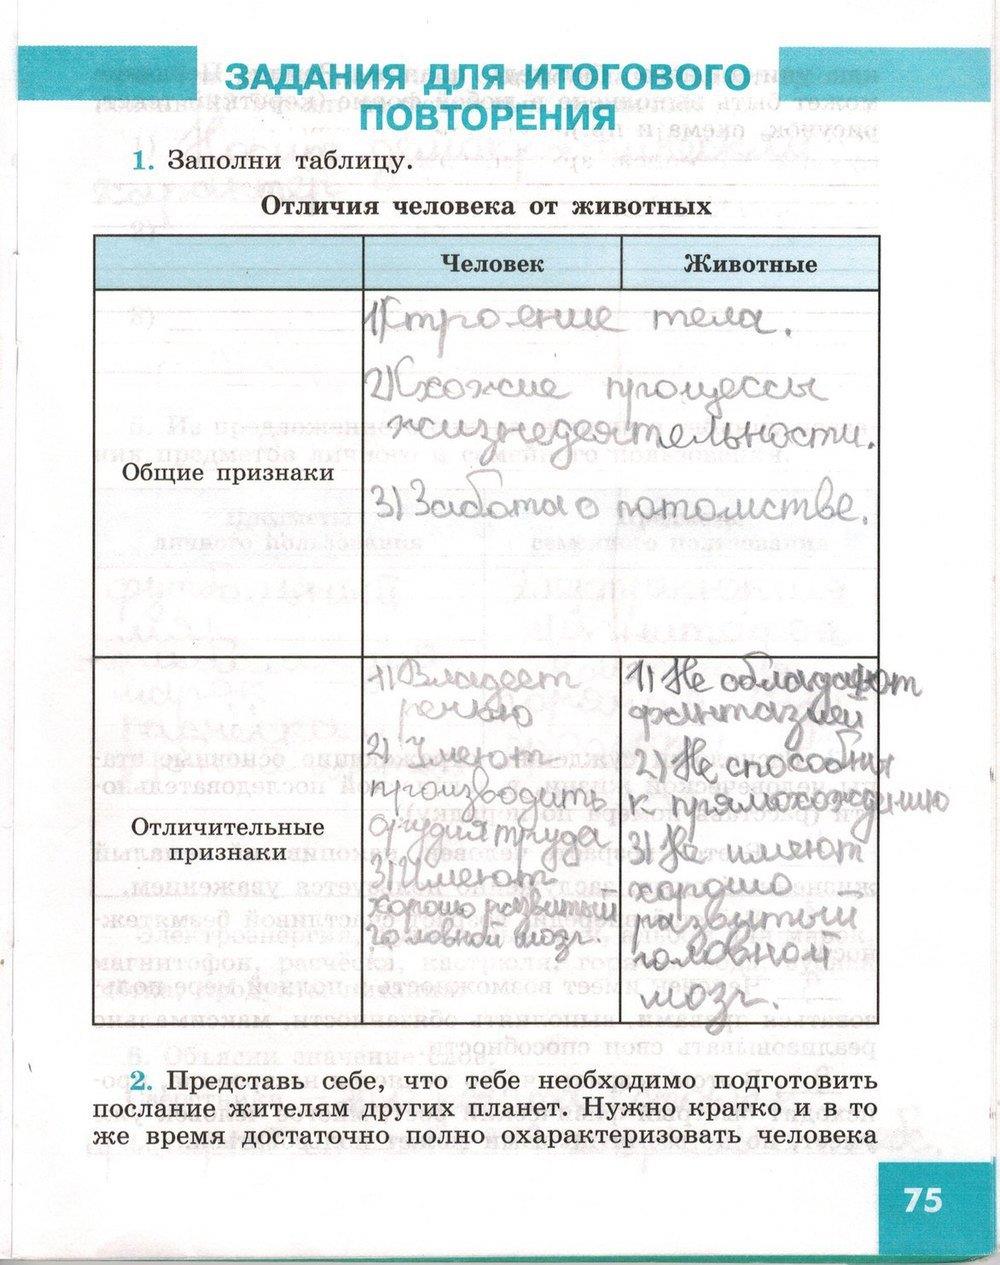 гдз 5 класс рабочая тетрадь страница 75 обществознание Иванова, Хотеенкова